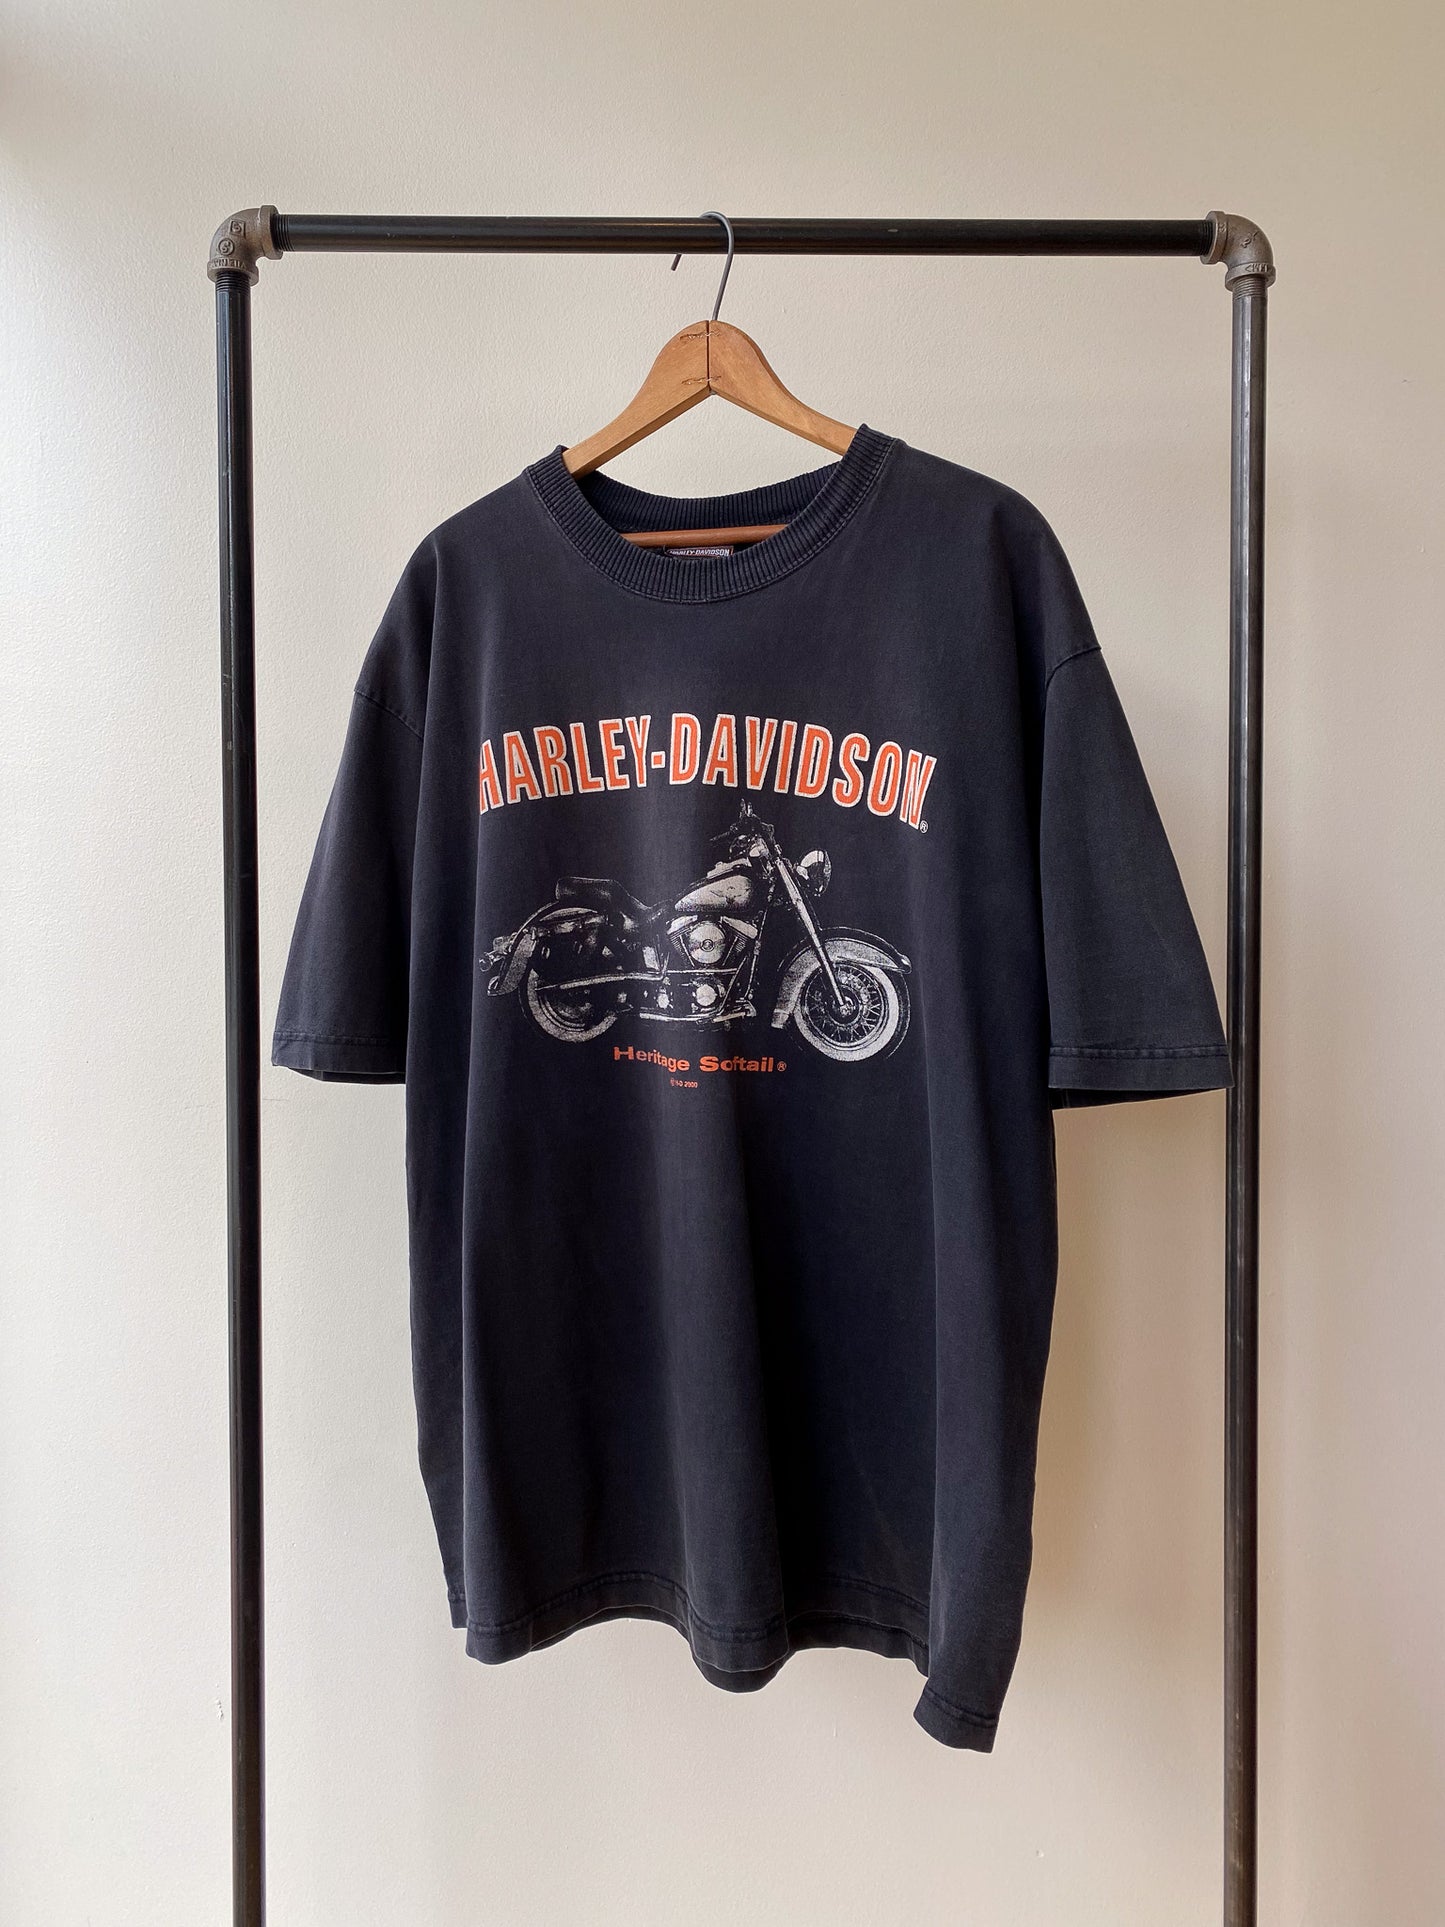 Harley-Davidson Heritage Softail T-Shirt—[XXL]